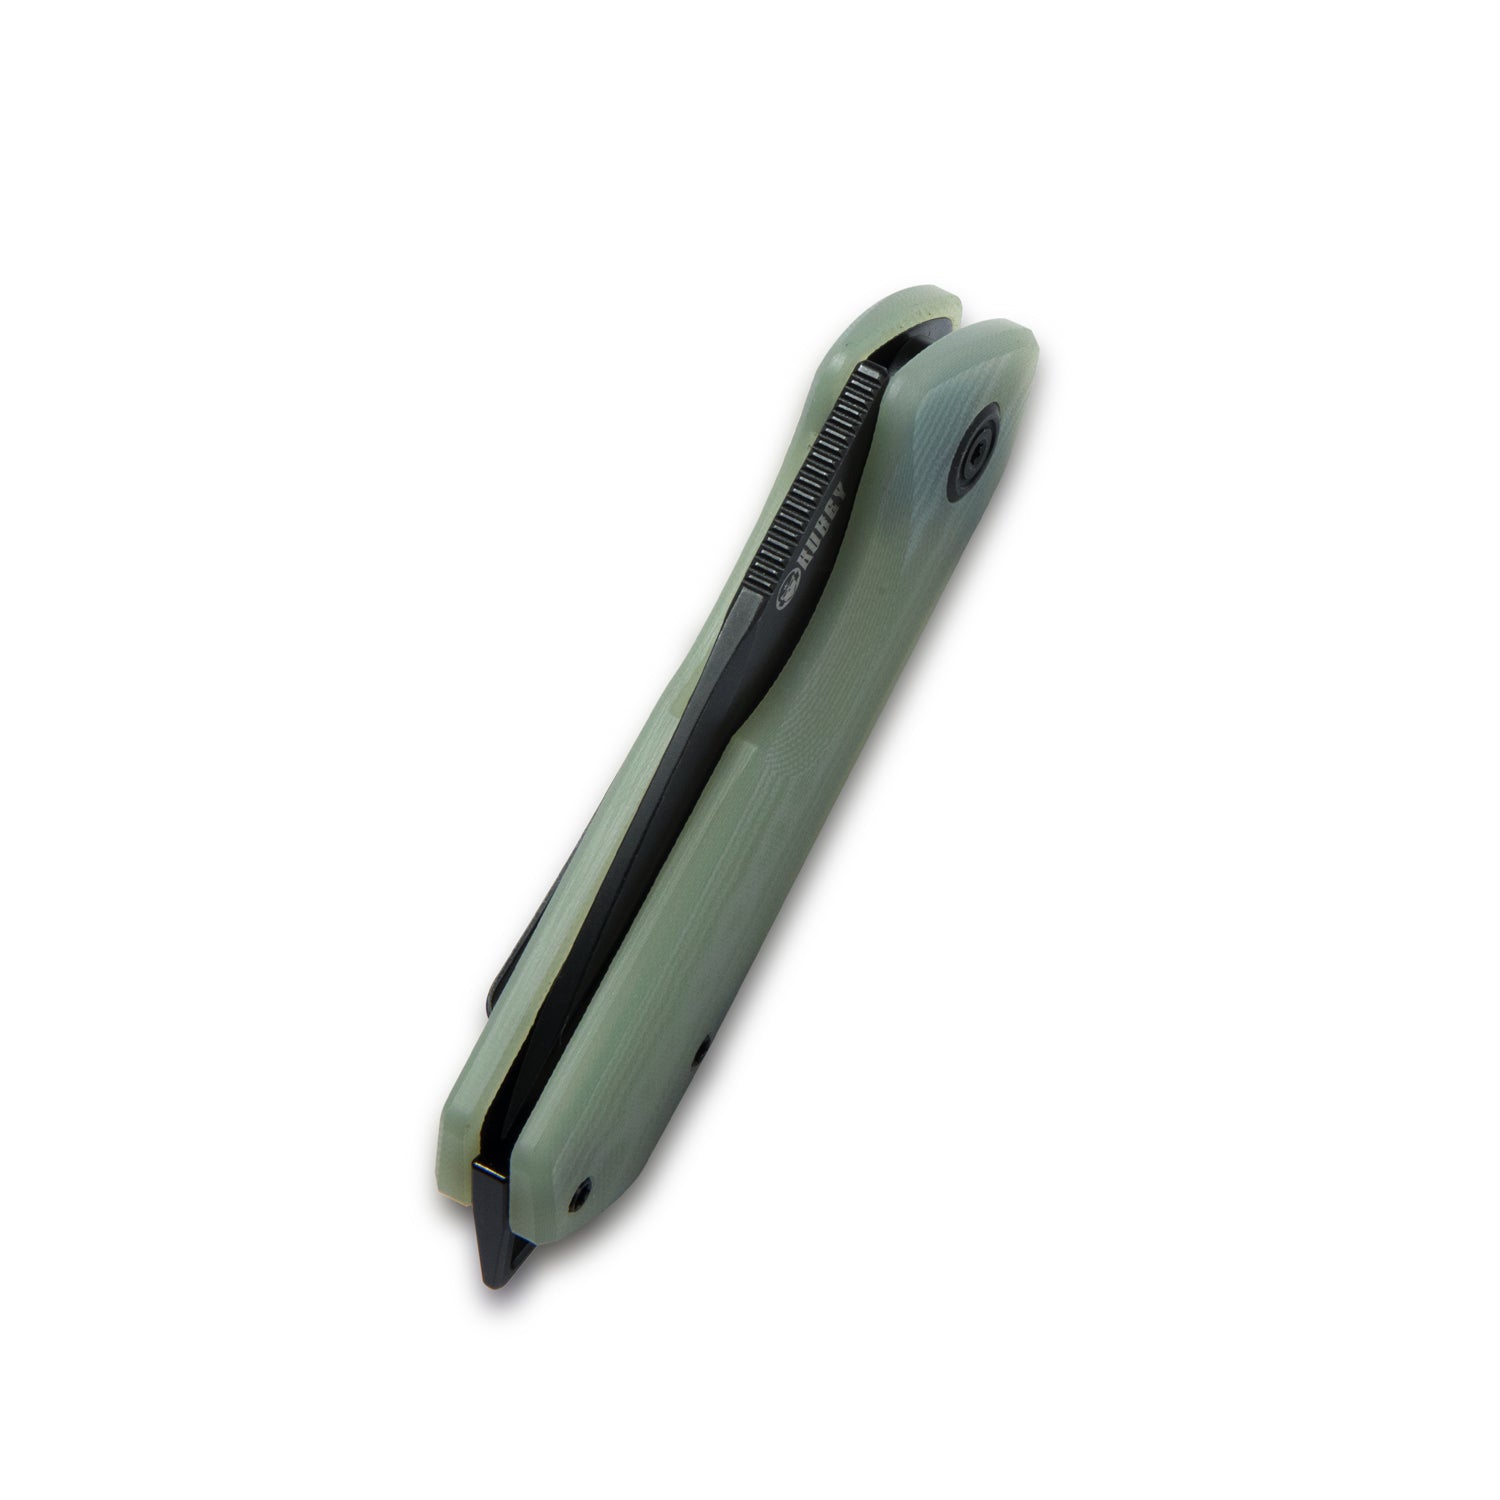 Kubey Campe Klappmesser Nest Liner Lock EDC Flipper Knife Jade G10 Handle 2.36" Dark Stonewashed D2 KU203I